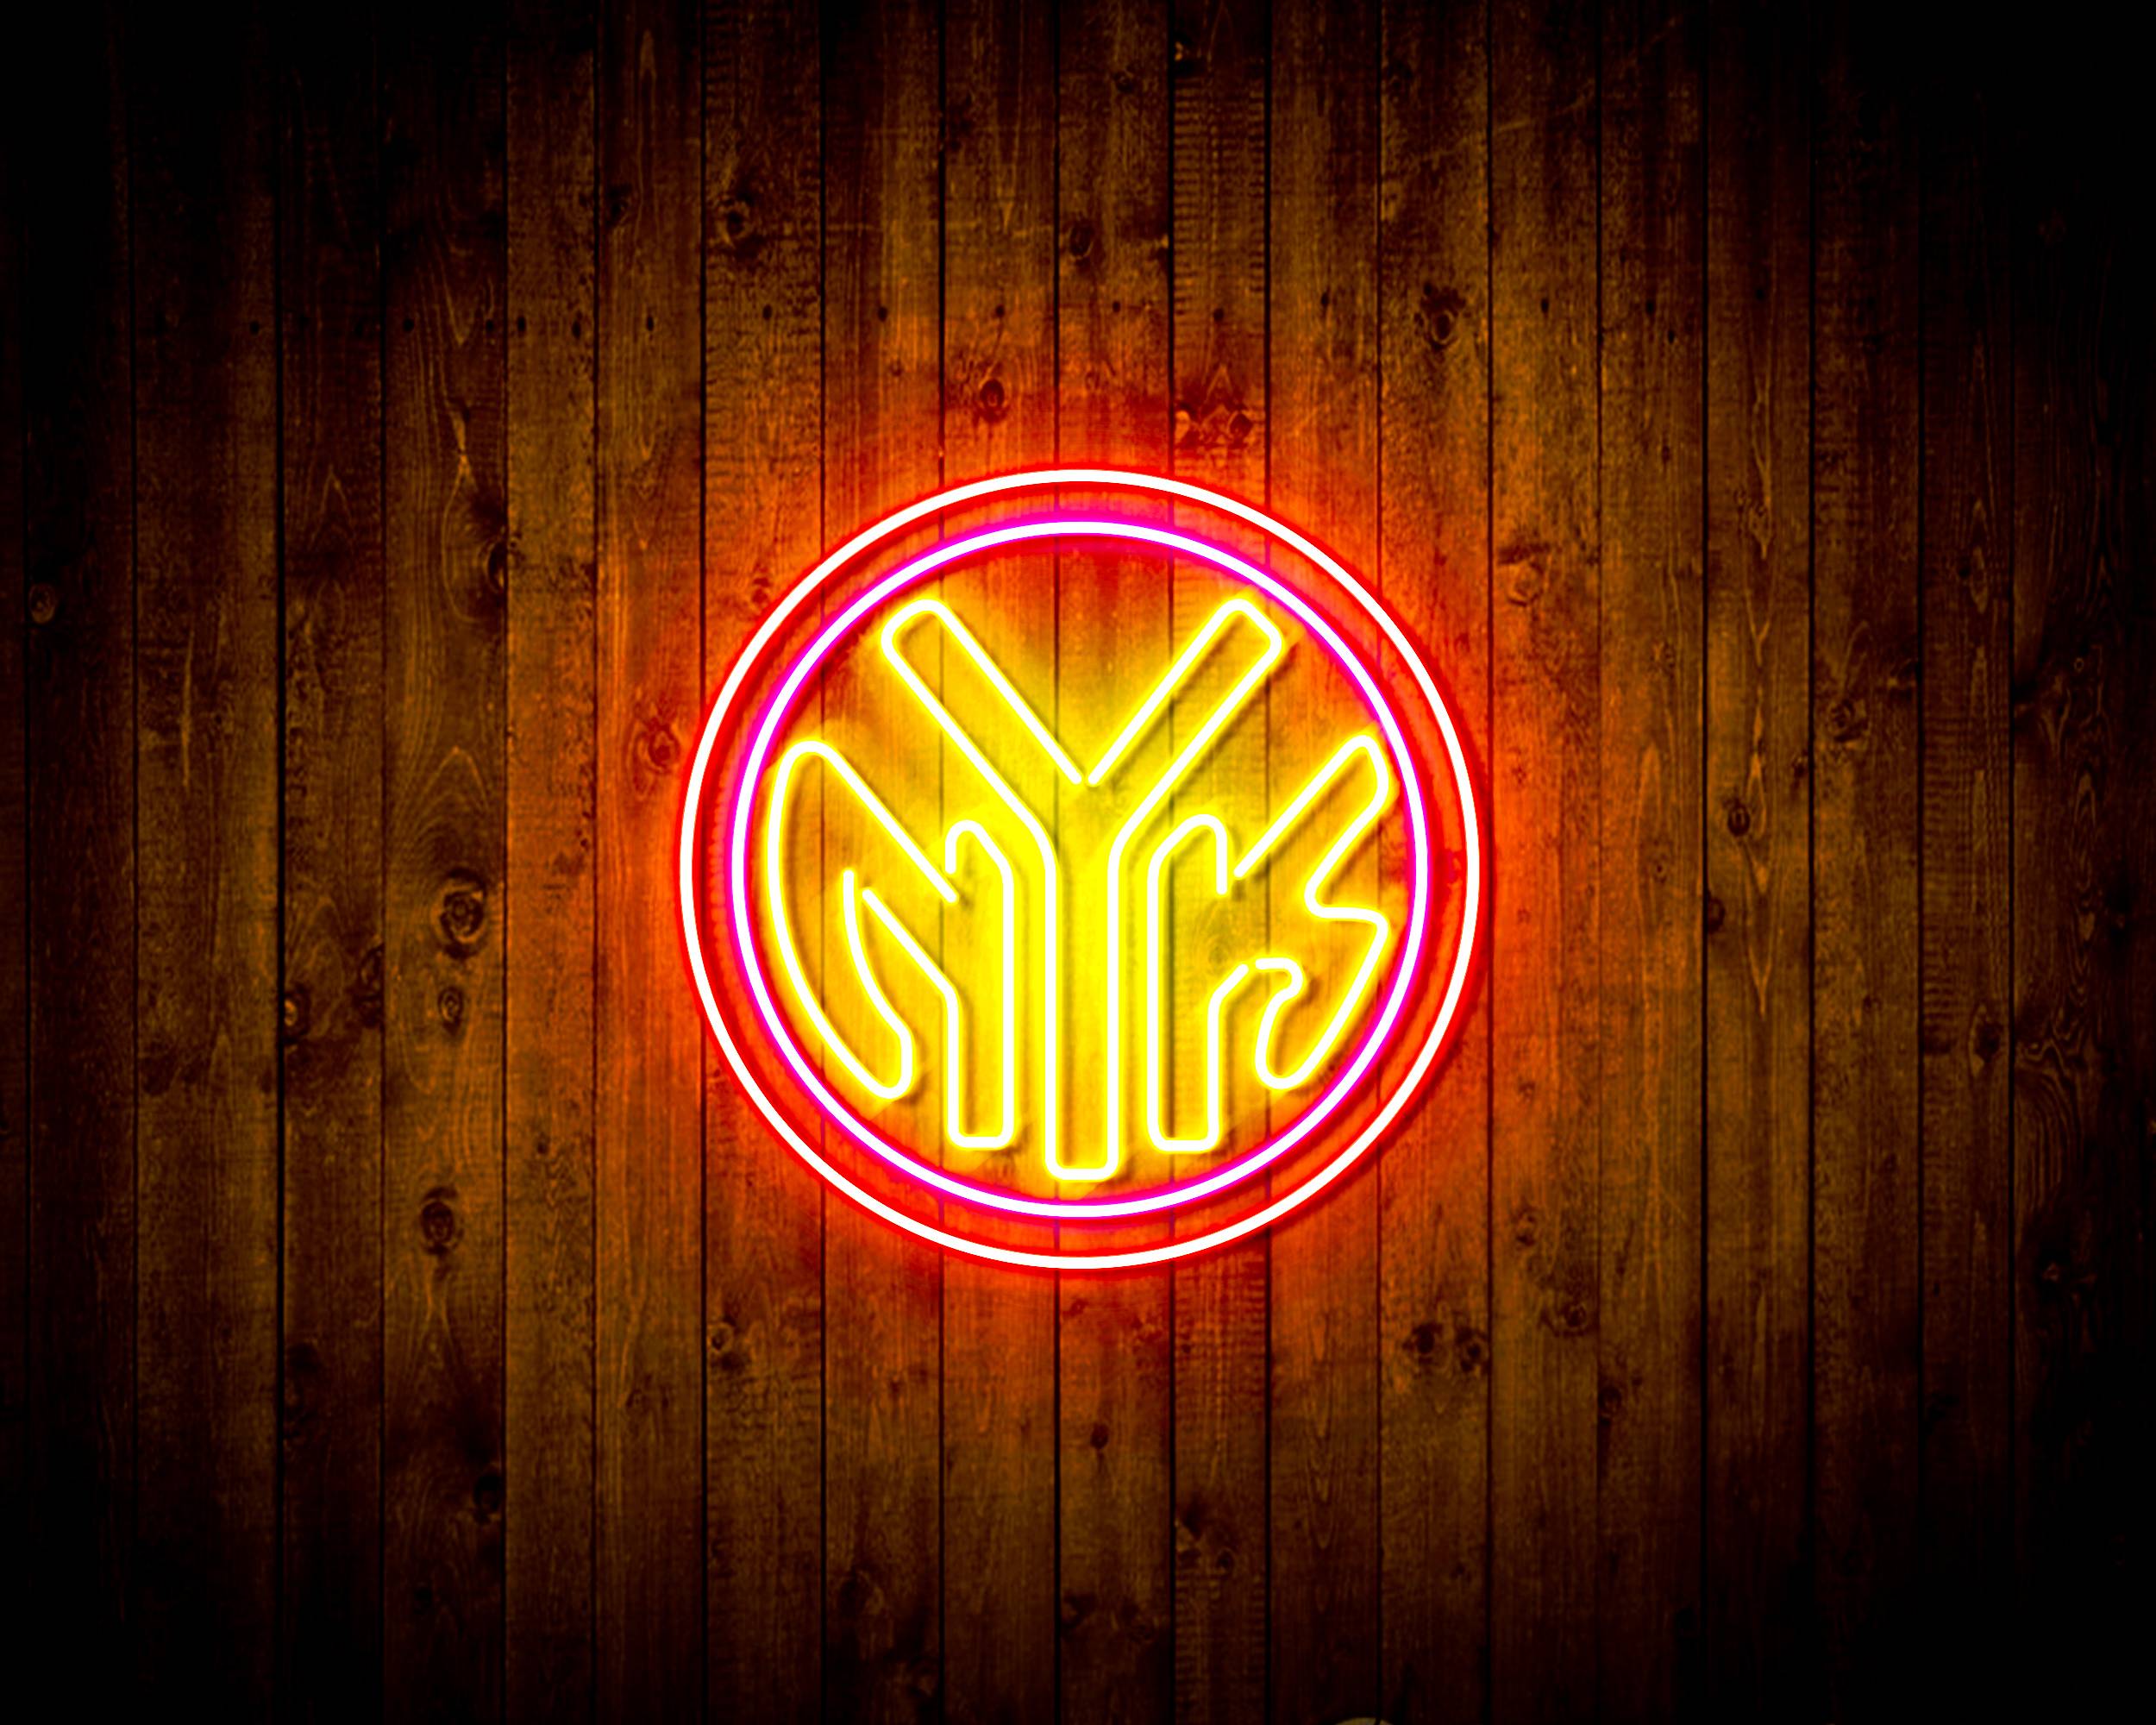 NBA New York Knicks Bar Neon Flex LED Sign